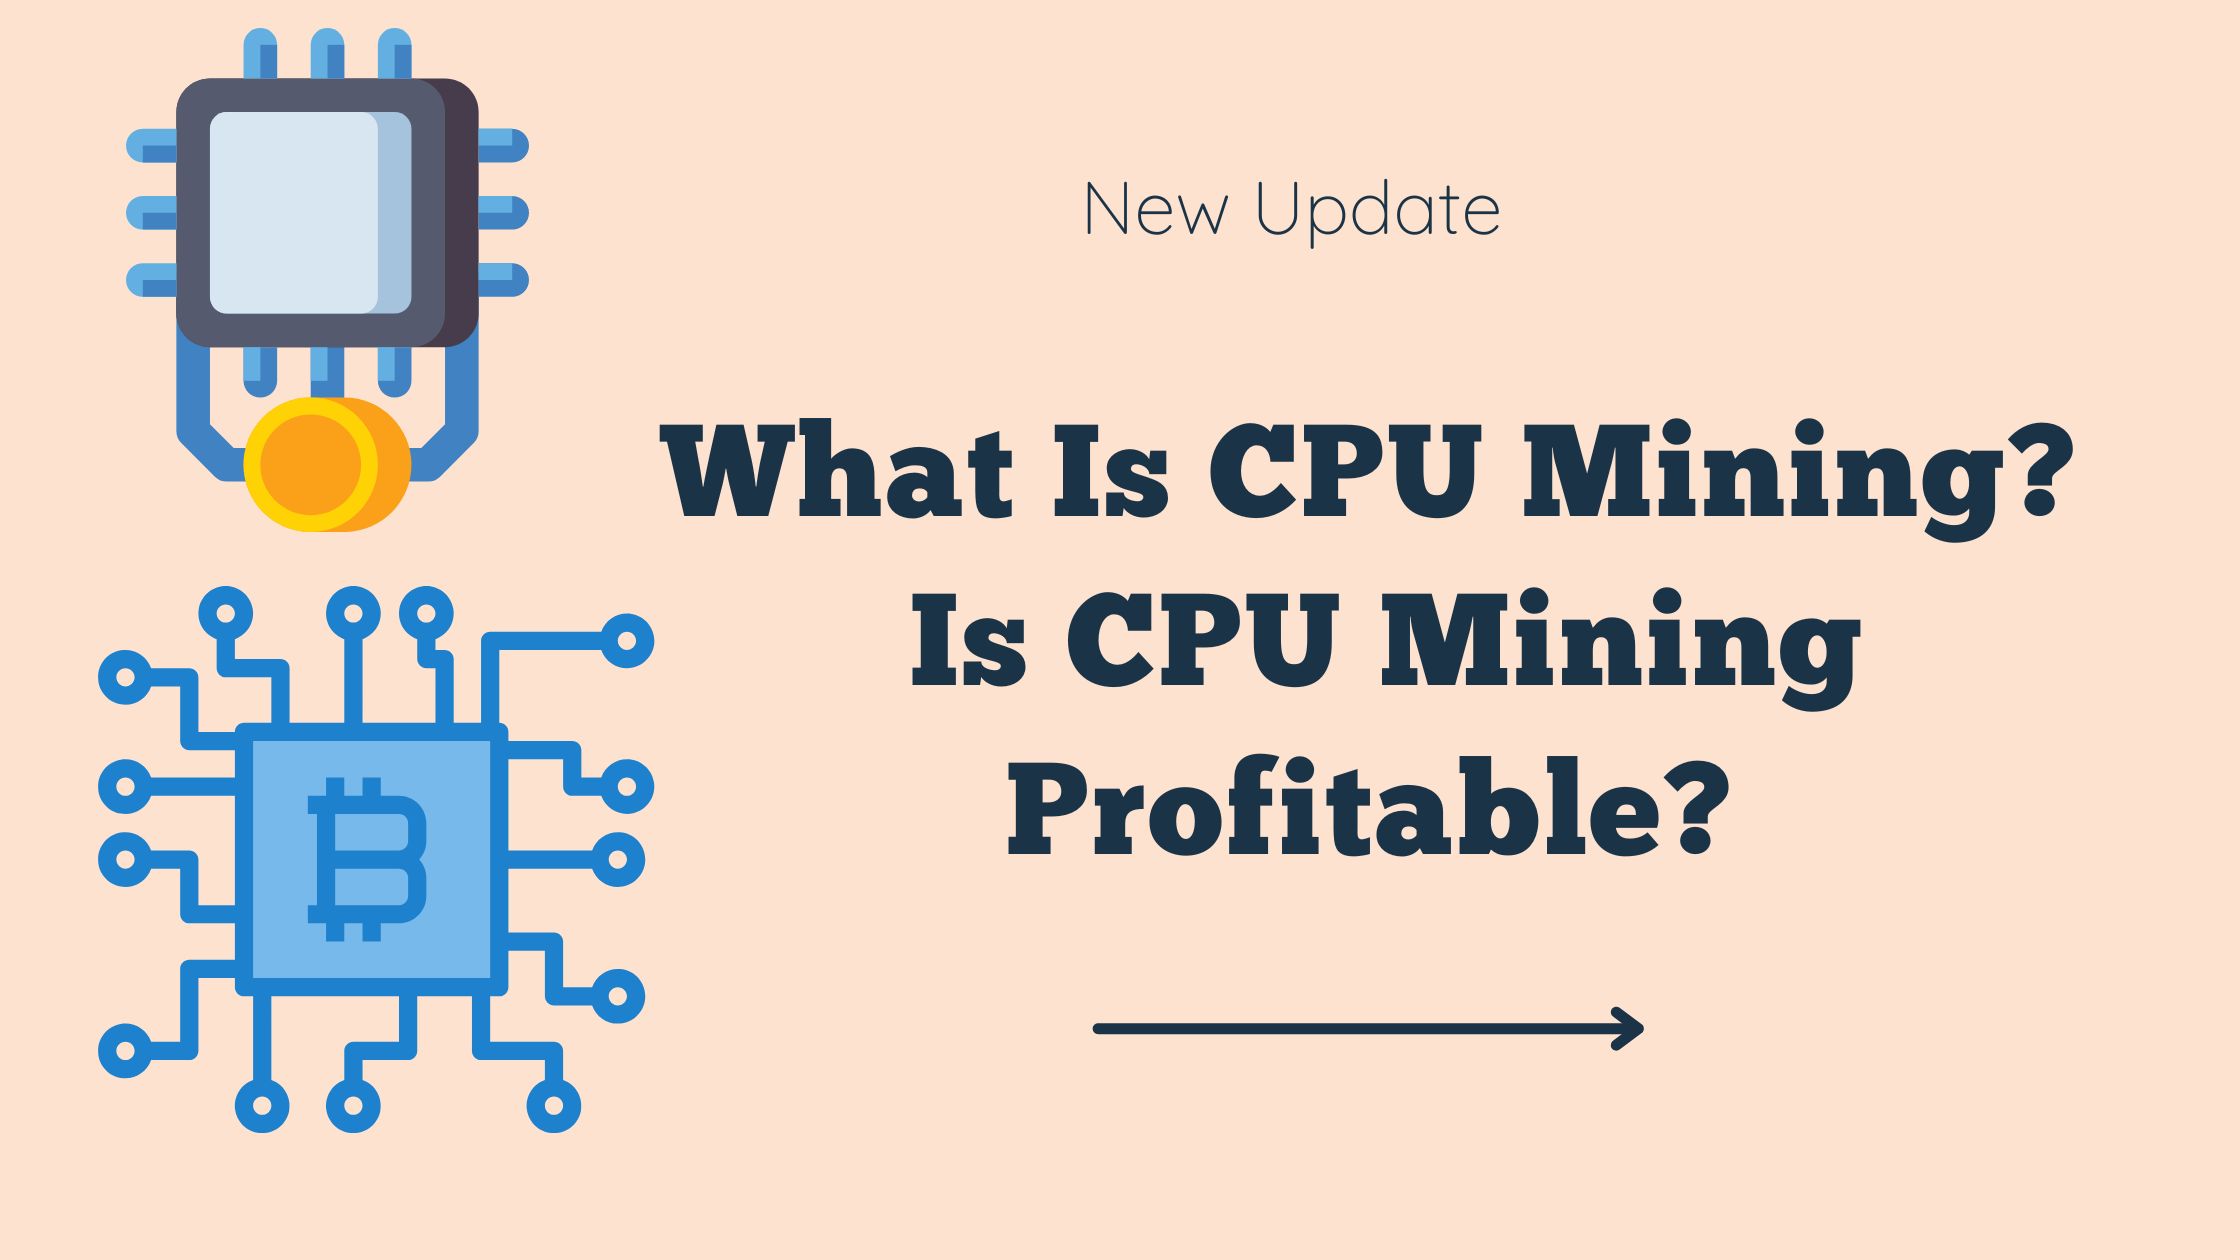 Is CPU Mining Profitable?